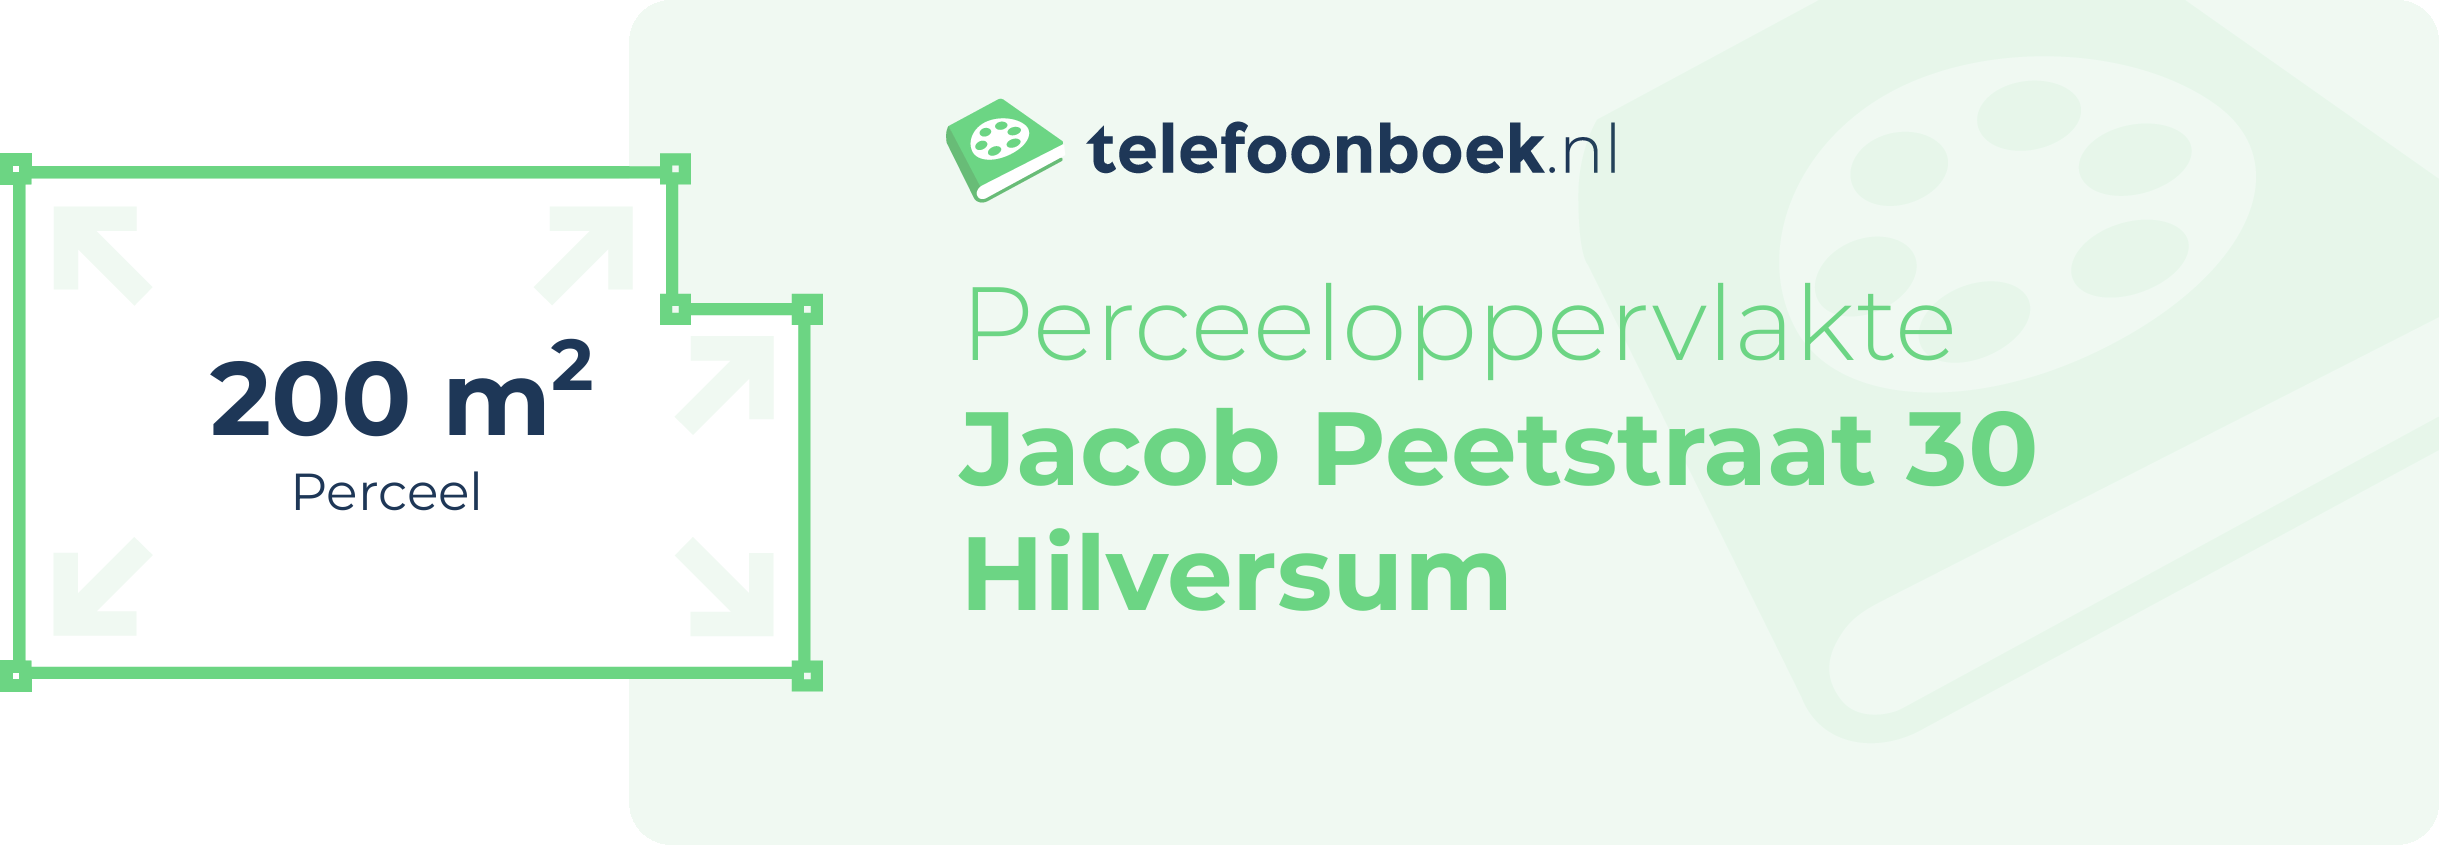 Perceeloppervlakte Jacob Peetstraat 30 Hilversum